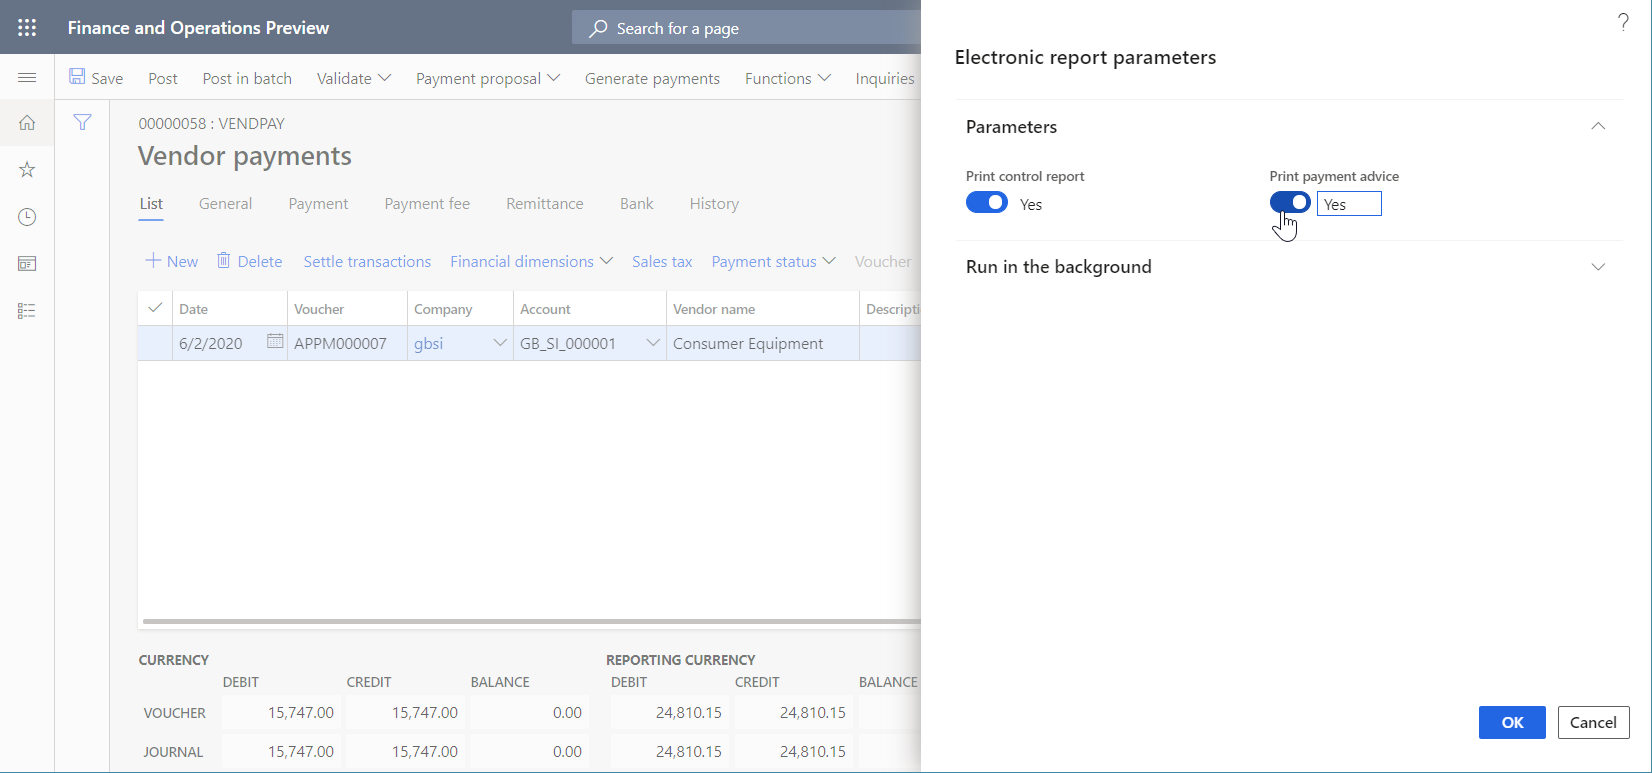 Electronic report parameters dialog box.